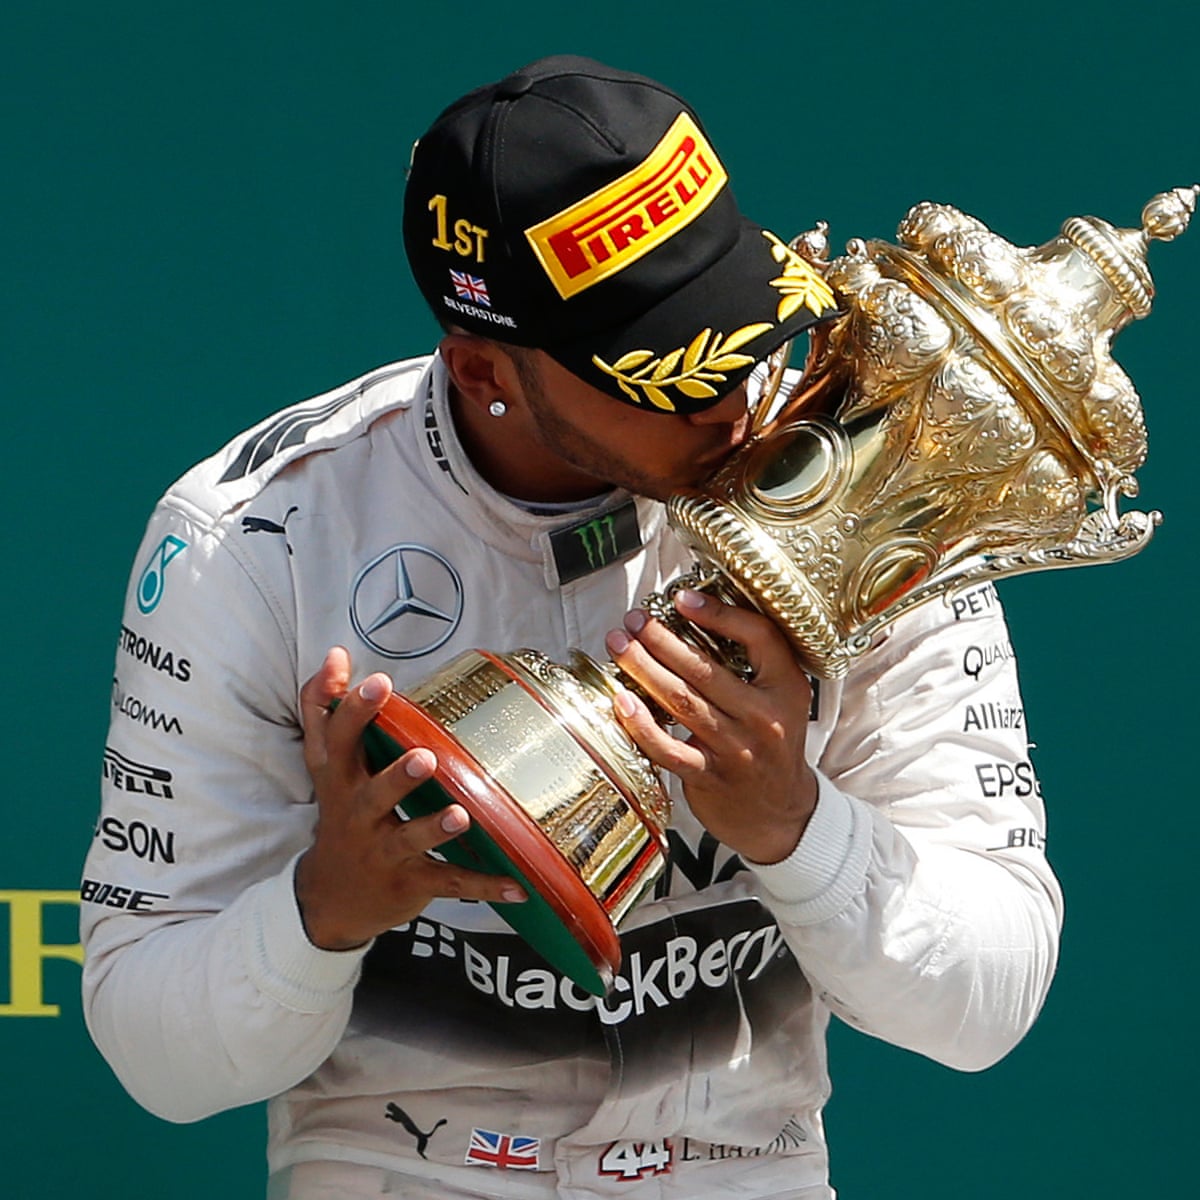 Lewis Hamilton wins British F1 GP from Nico Rosberg at damp Silverstone, British Grand Prix